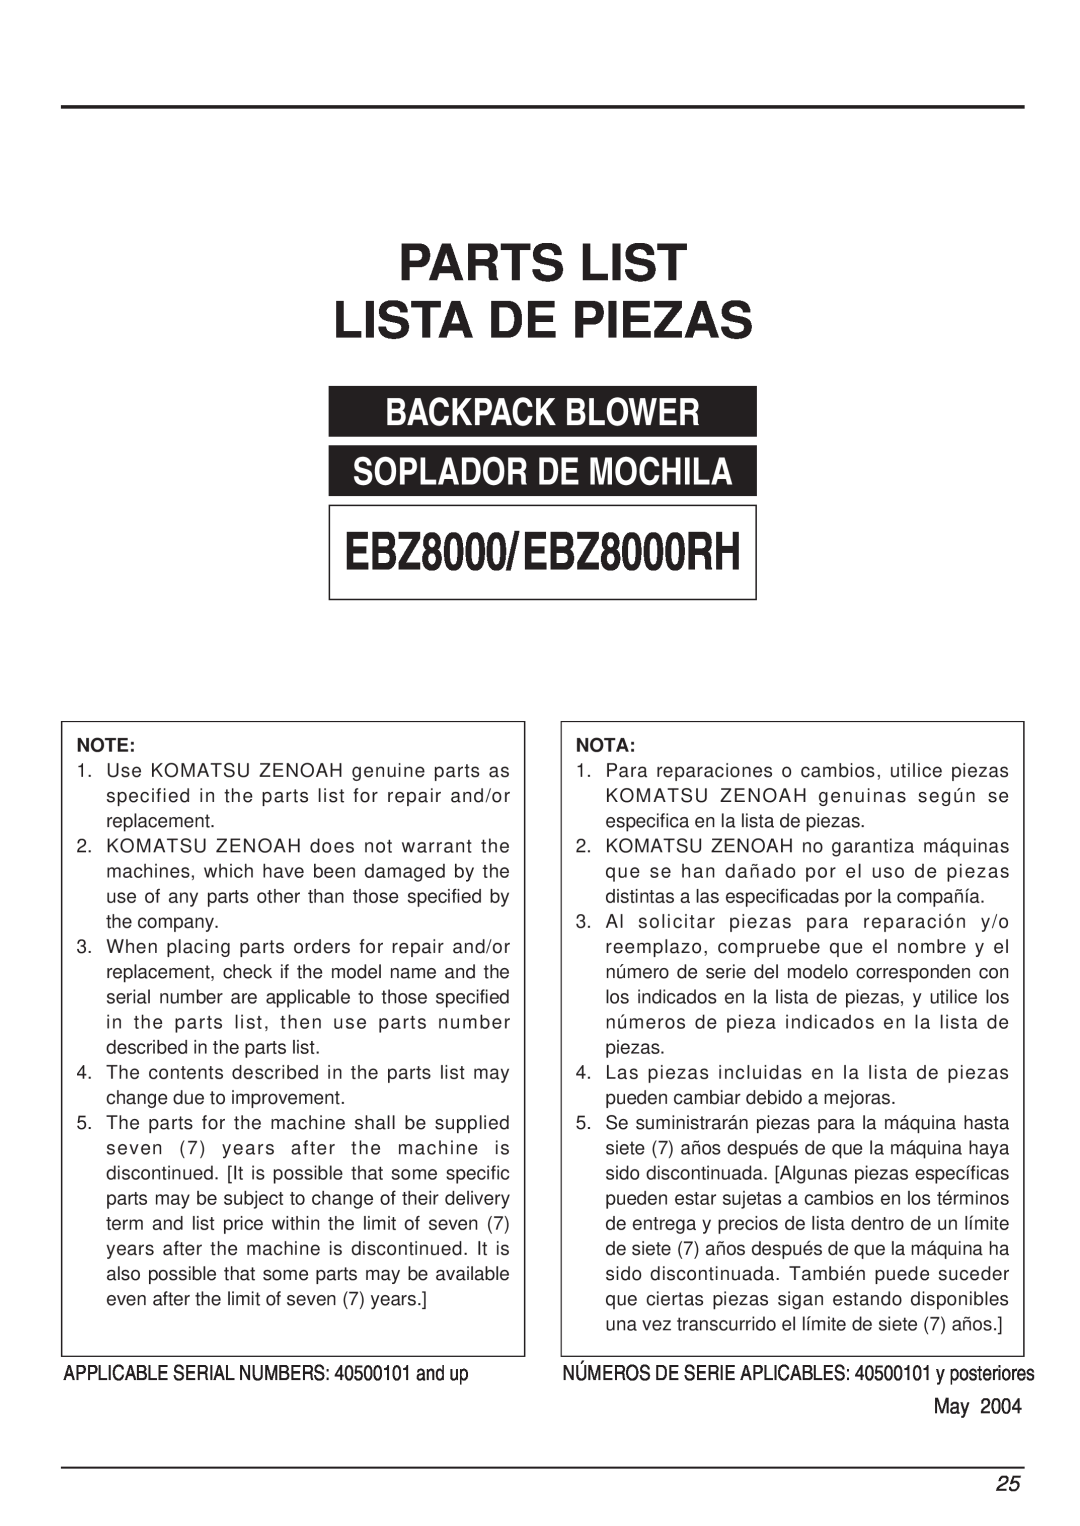 RedMax manual Parts List Lista De Piezas, EBZ8000/ EBZ8000RH, Backpack Blower Soplador De Mochila, Nota 